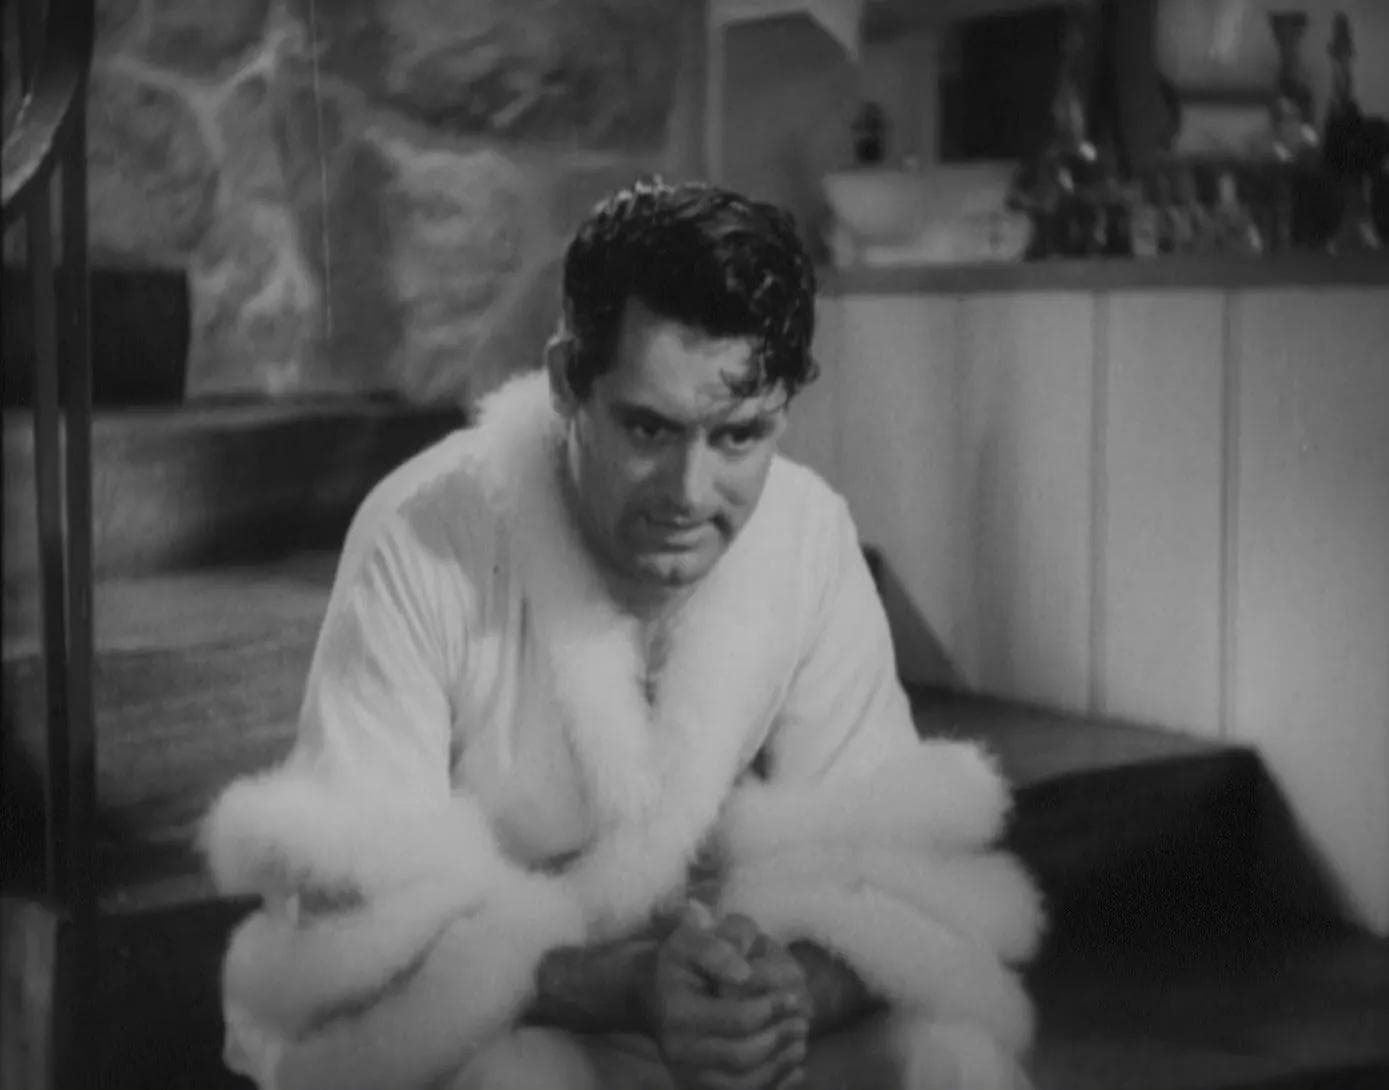 Bringing Up Baby (1938) | Cary Grant in Bringing Up Baby (1938)